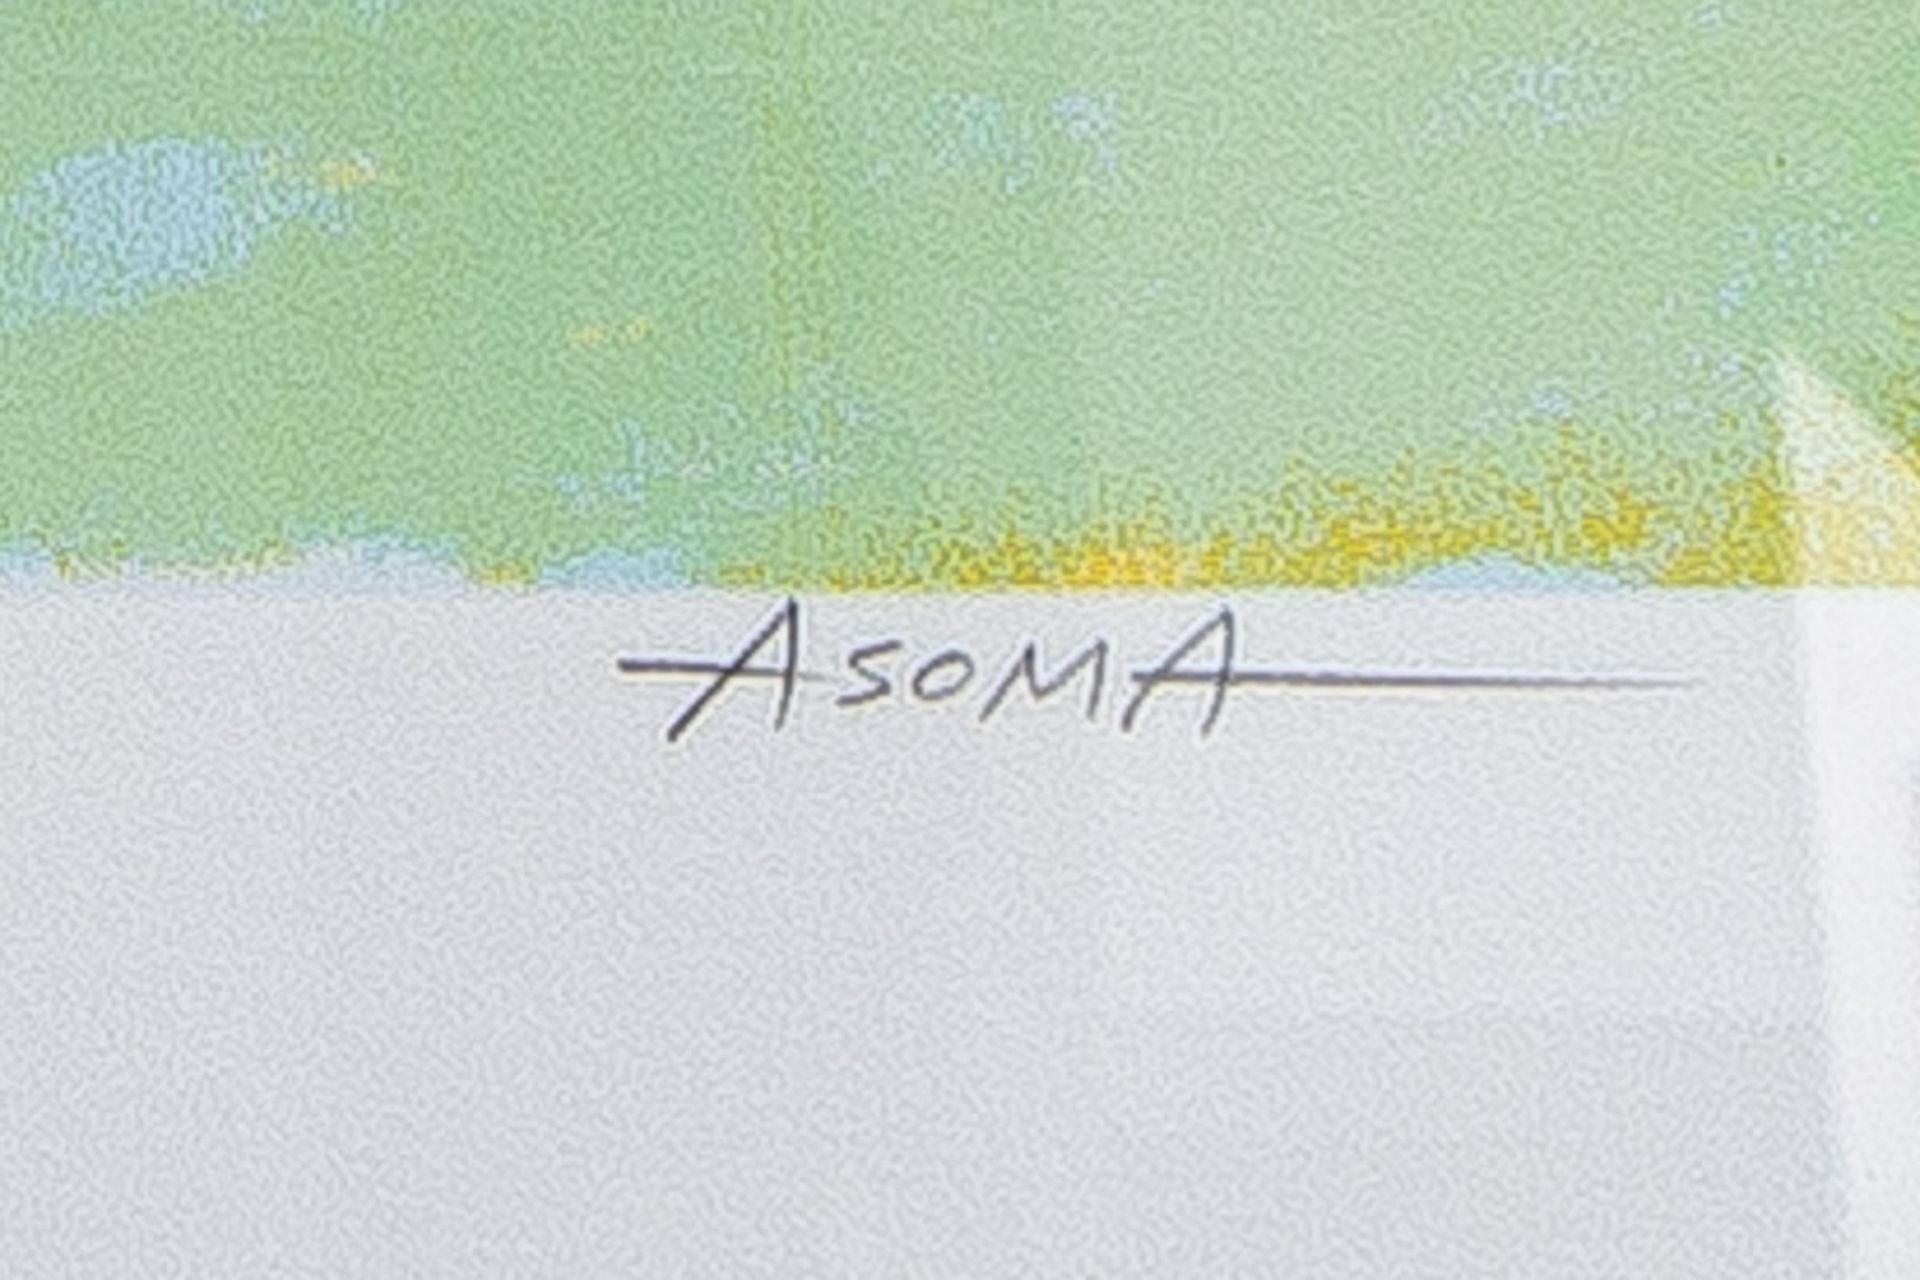 Asoma, Tadashi (1923 - 2017), Seerosen - Image 2 of 2